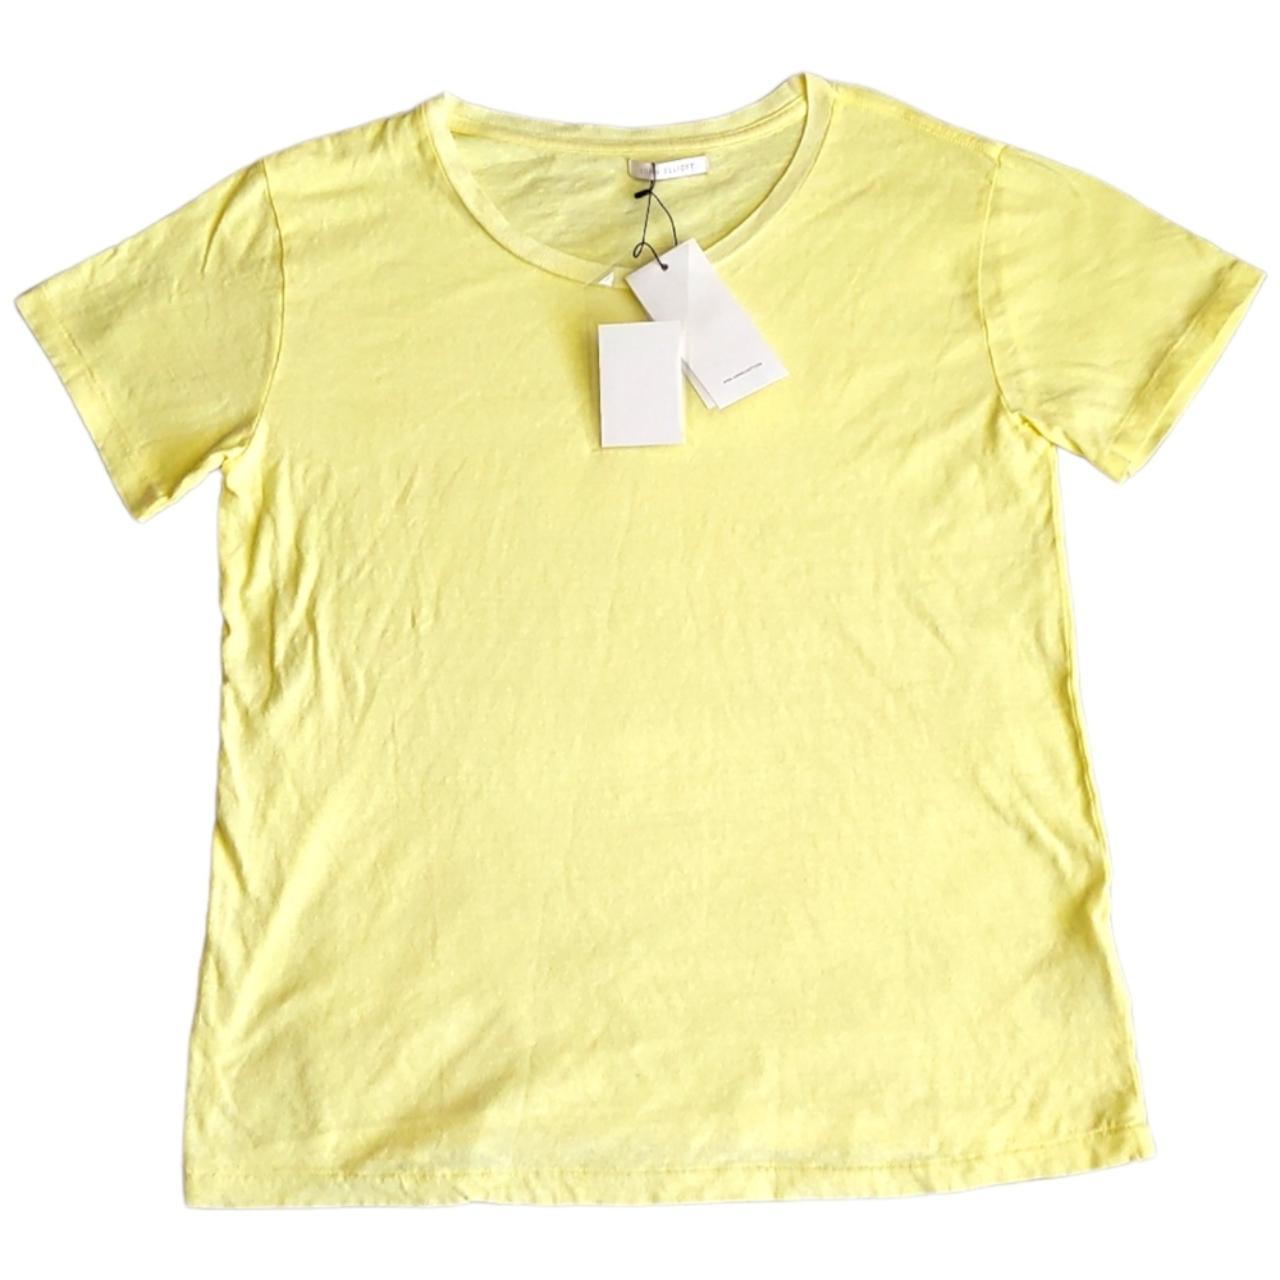 John Elliott Women's Yellow T-shirt